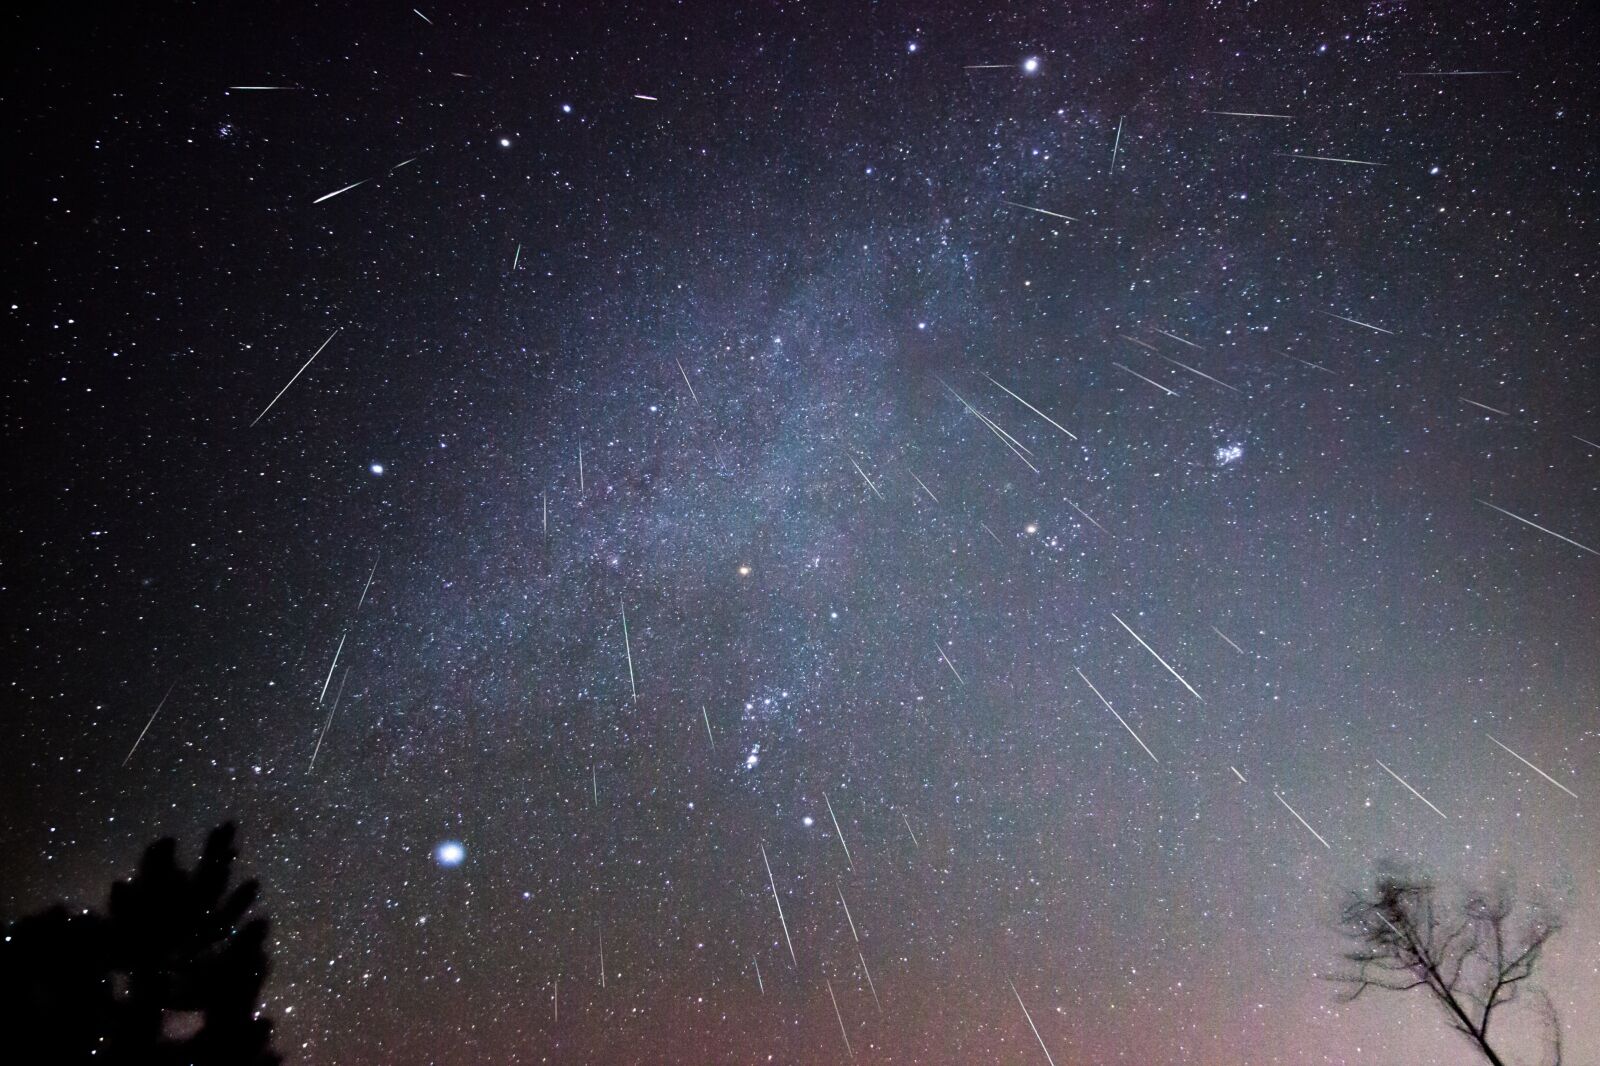 Geminid meteors shower downward in Virginia one of the best astronomy calendar events in December 